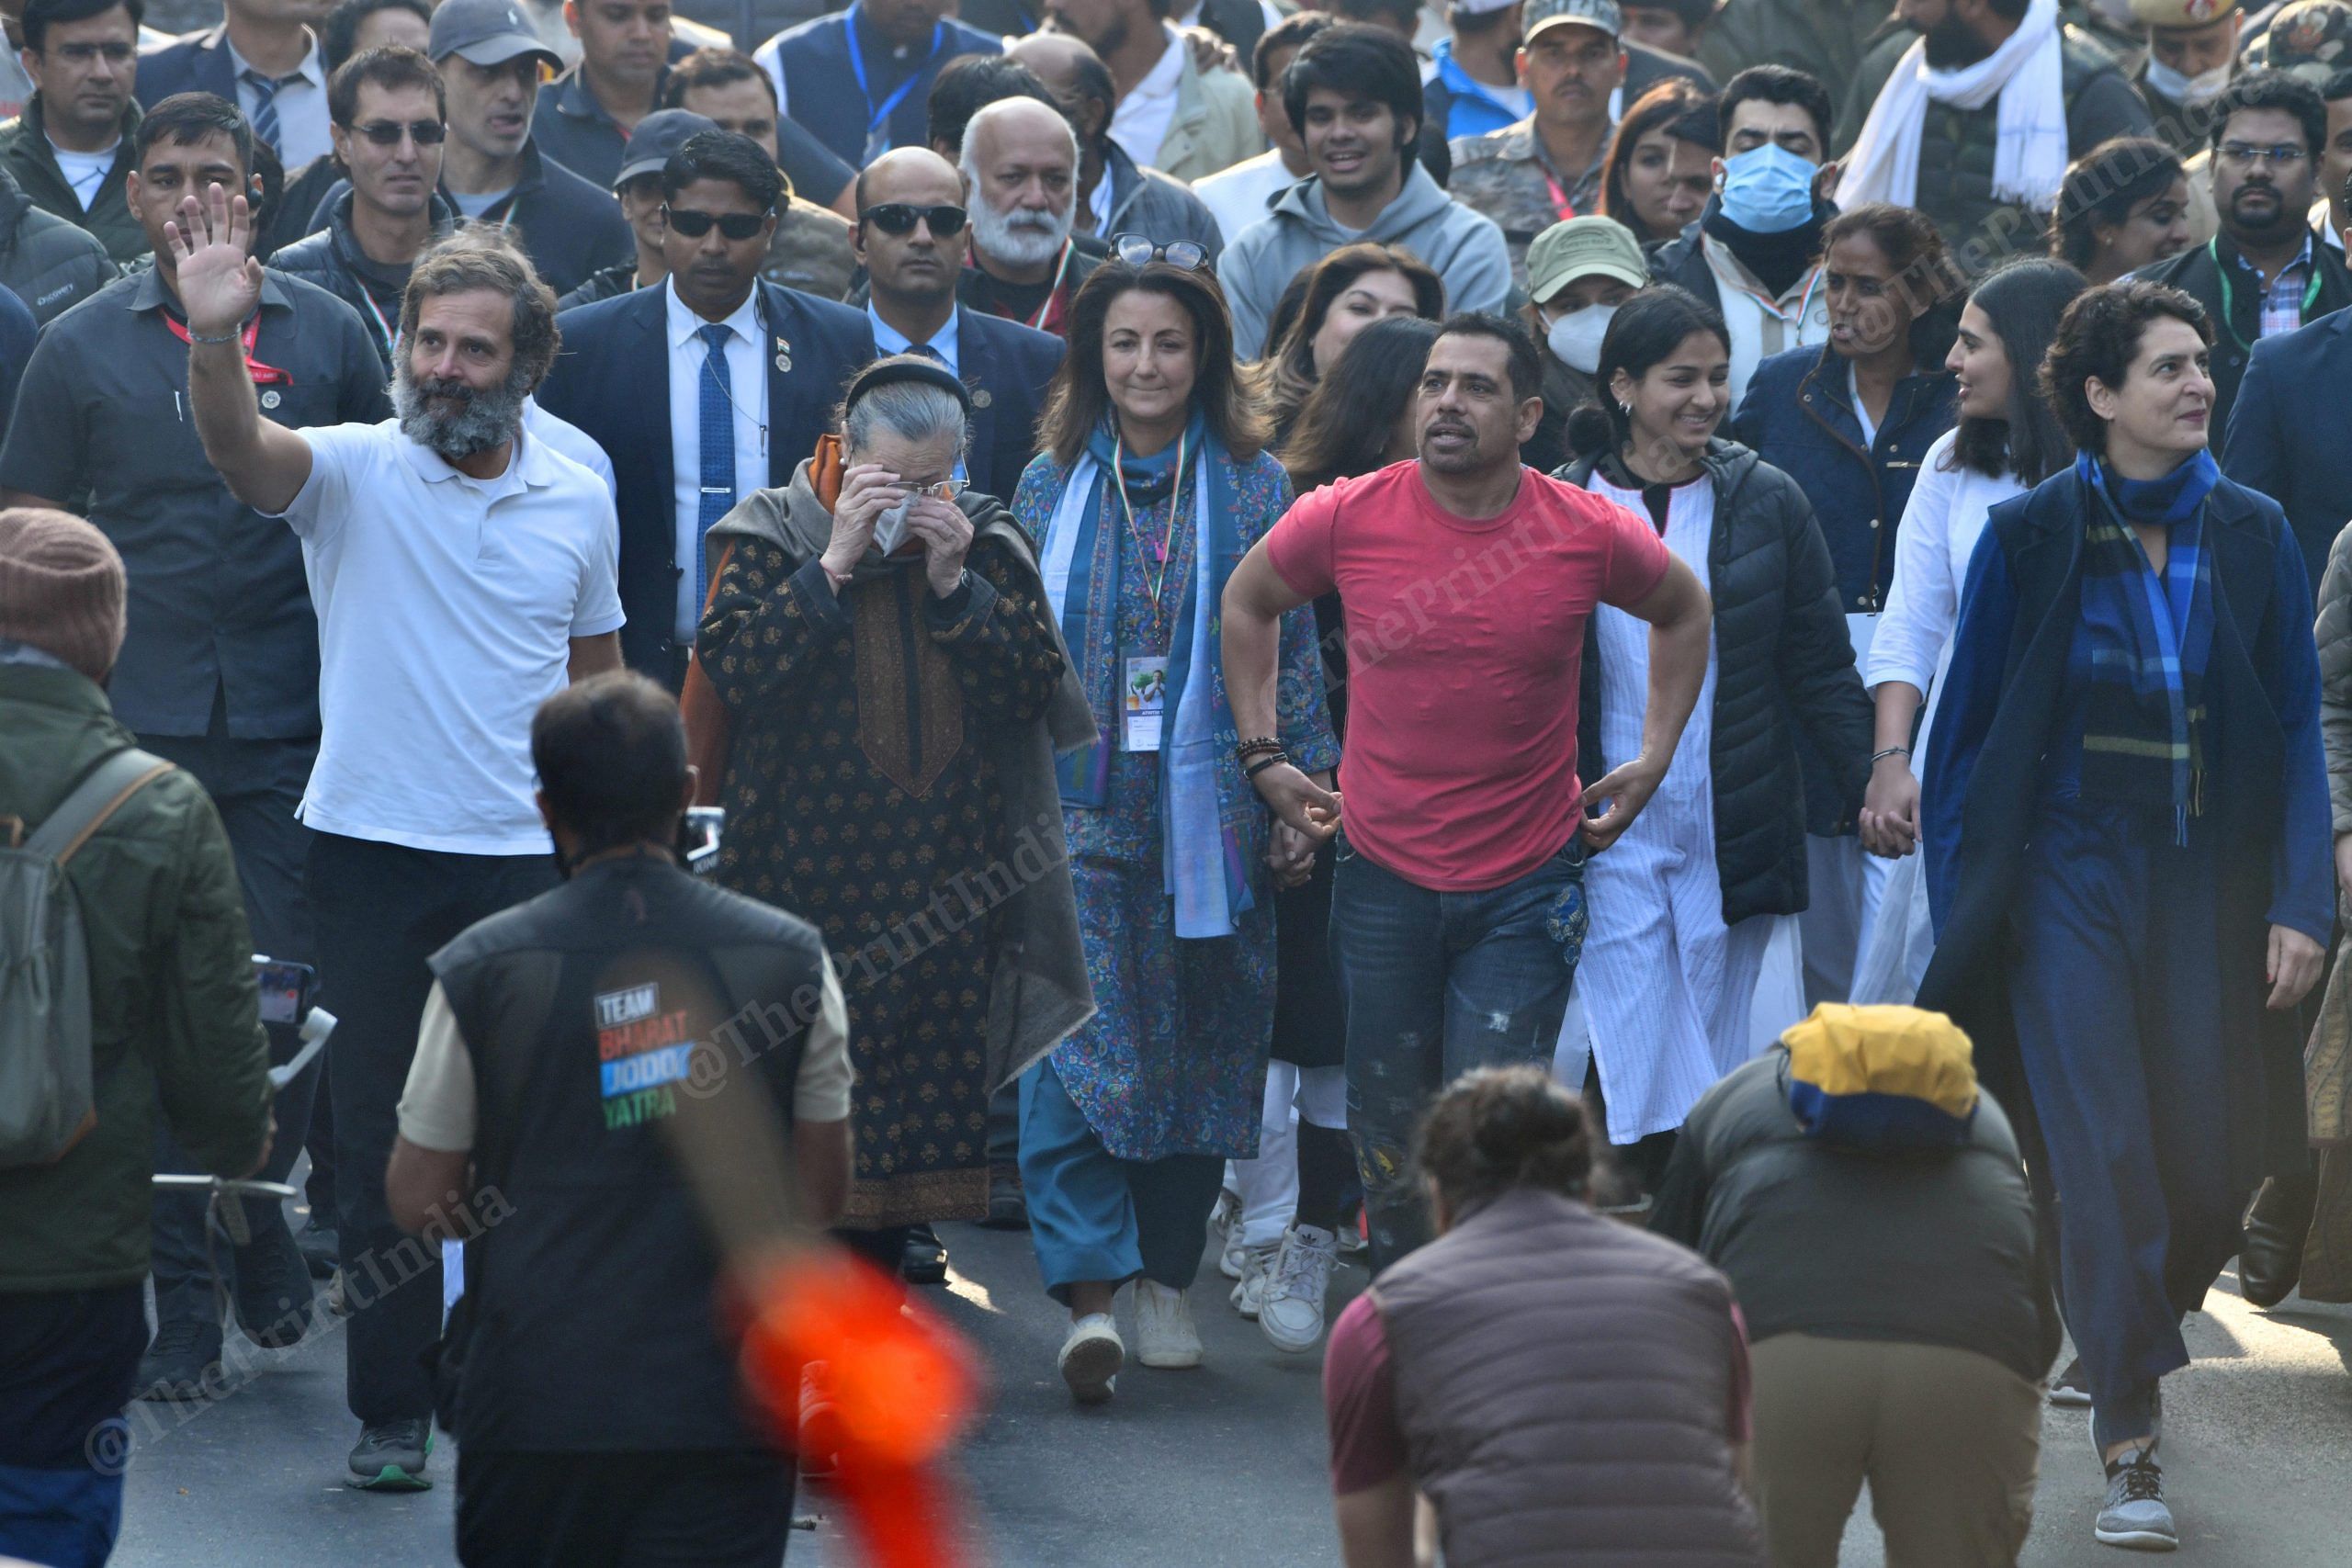 Congress leaders Sonia Gandhi and Priyanka Gandhi Vadra, along with Robert Vadra, and Miraya Vadra join Rahul Saturday | Photo: Suraj Singh Bisht | ThePrint